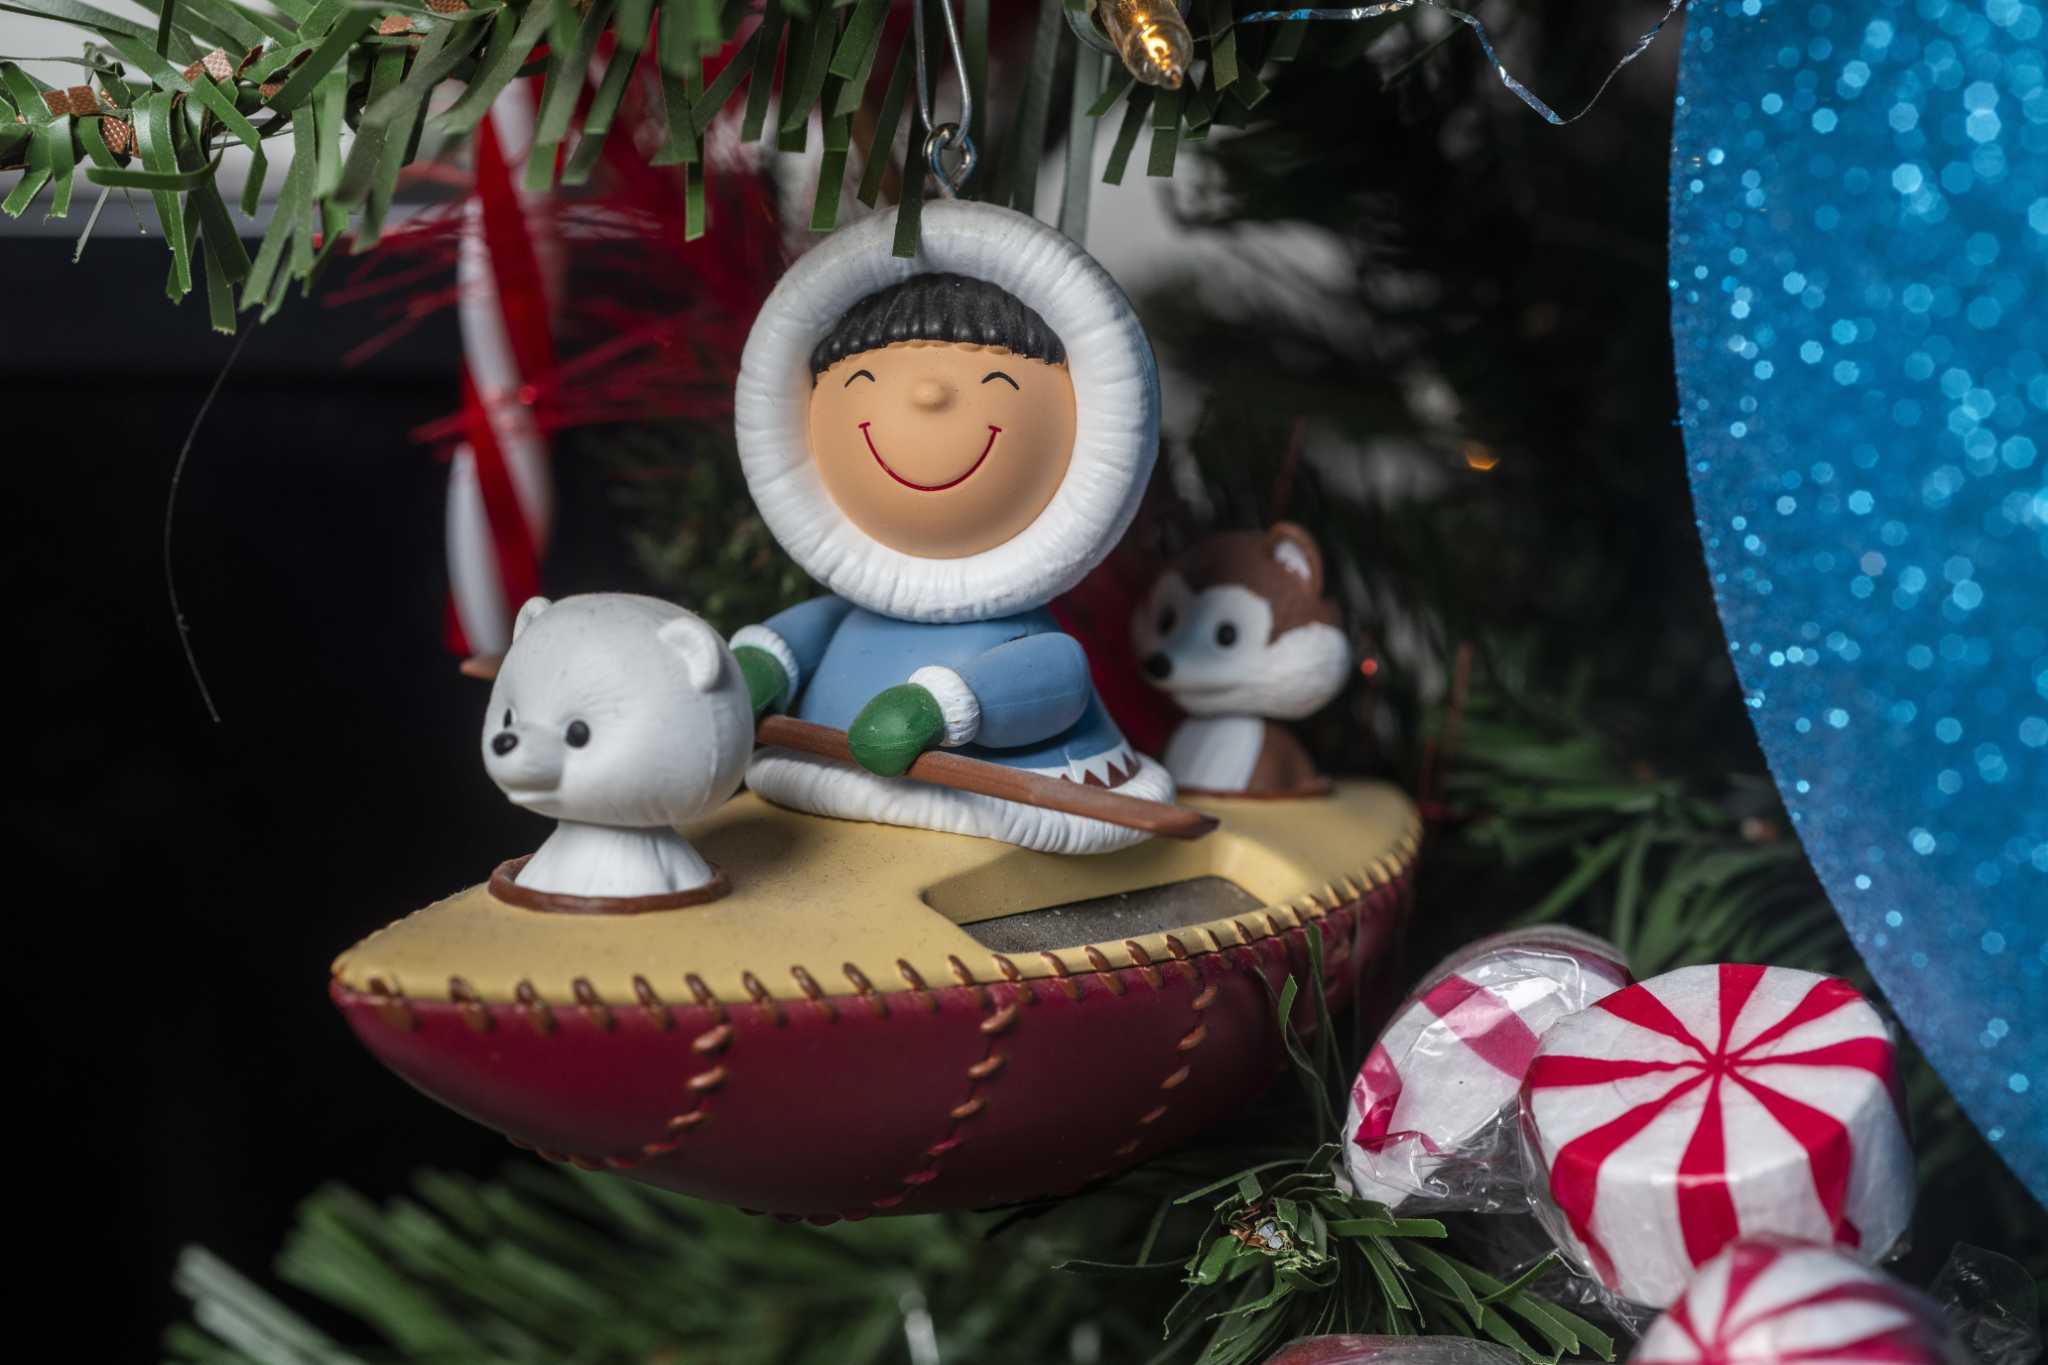 San Antonio Christmas Hallmark Keepsake ornament collector has